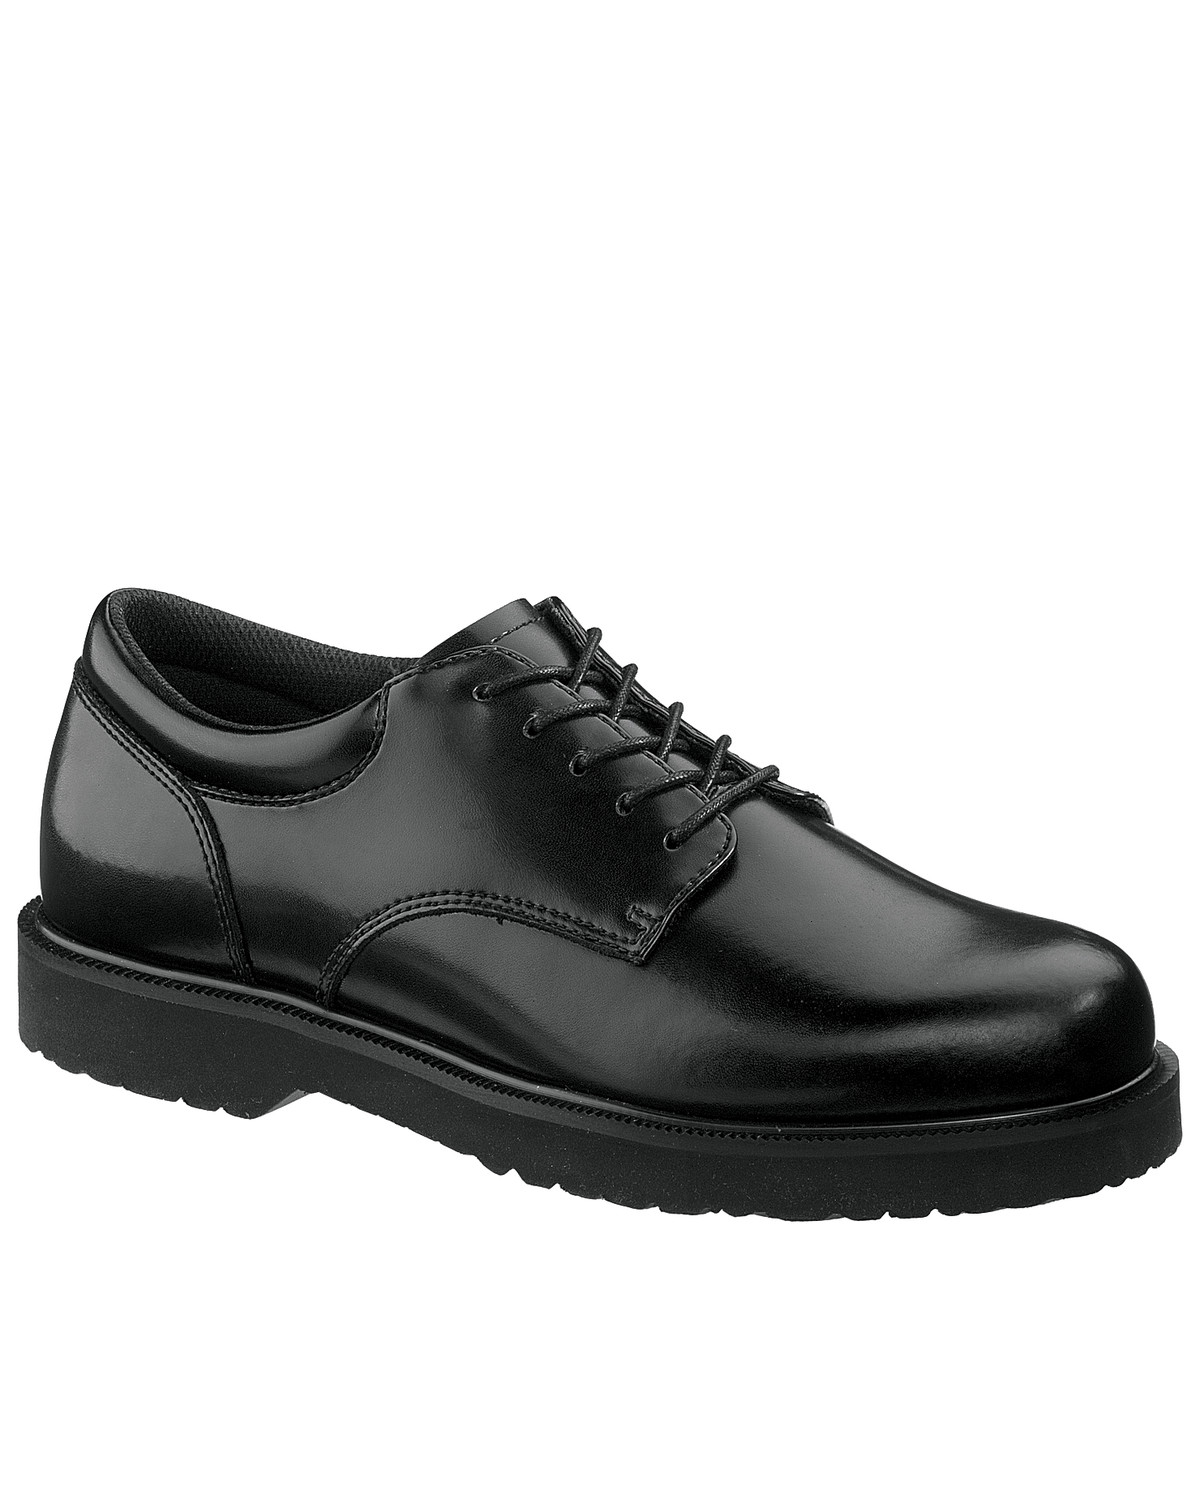 men's high shine black shoes